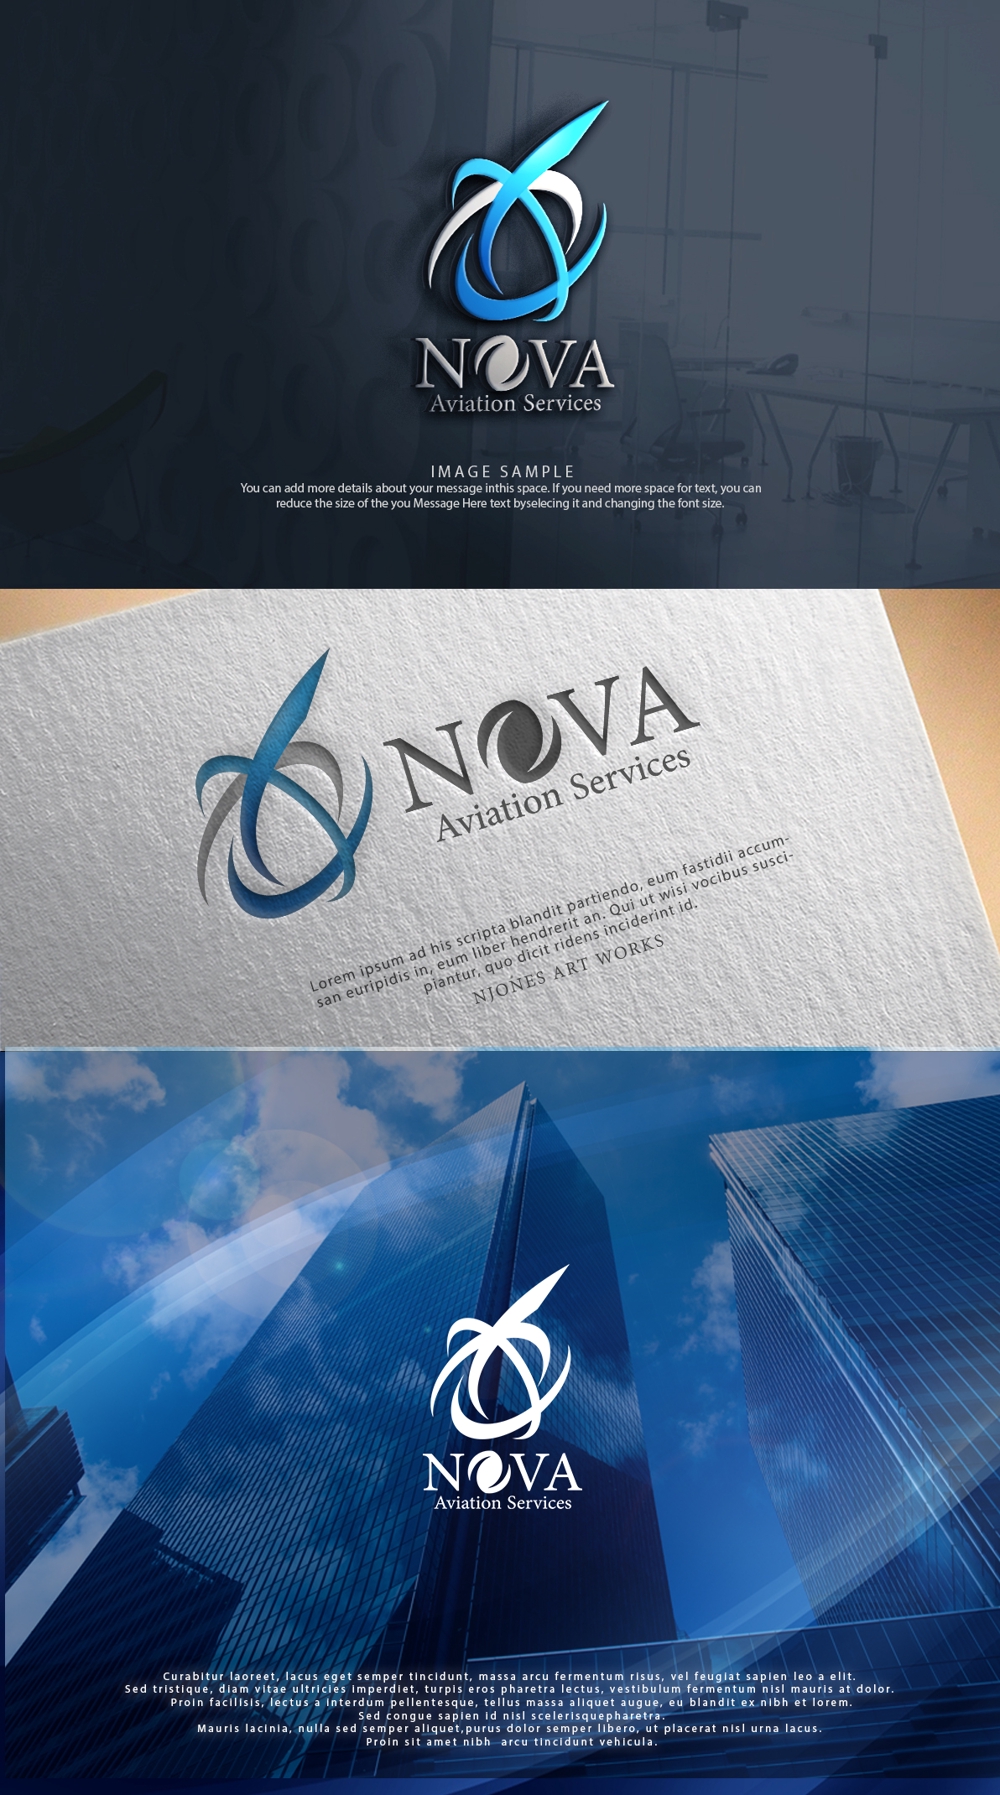 NOVA-Aviation-Services2.jpg